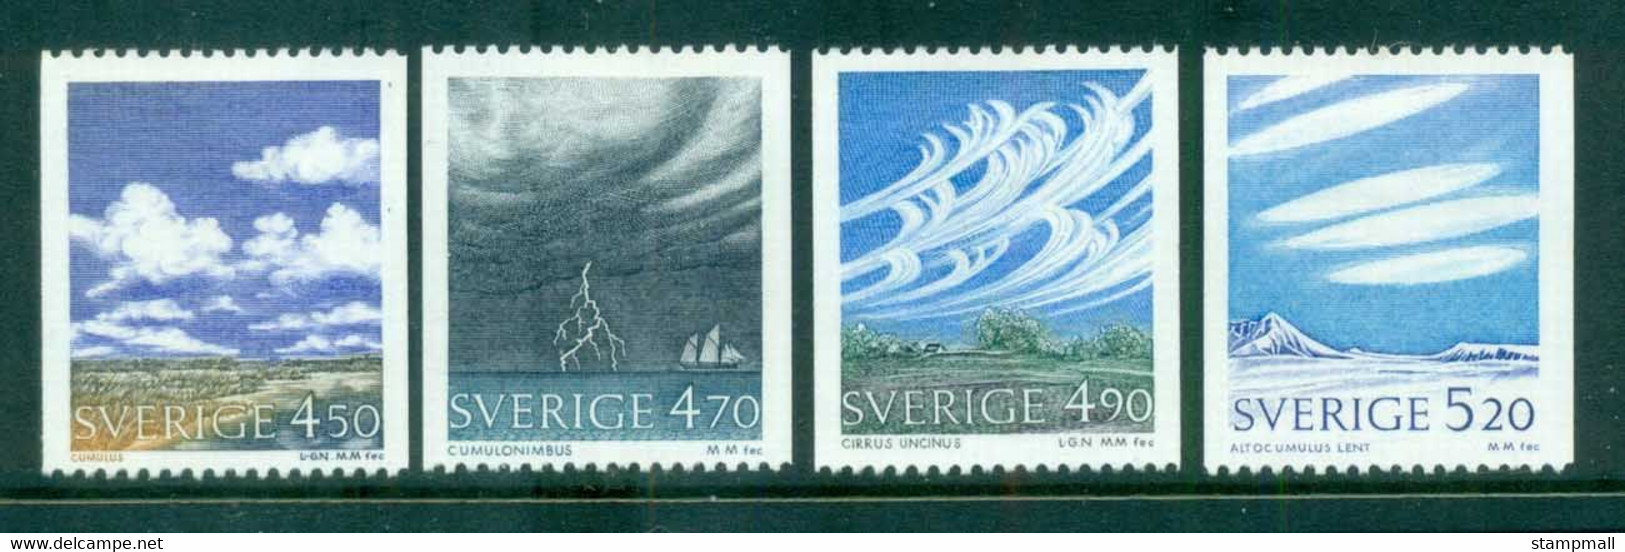 Sweden 1990 Clouds MUH Lot84149 - Unused Stamps